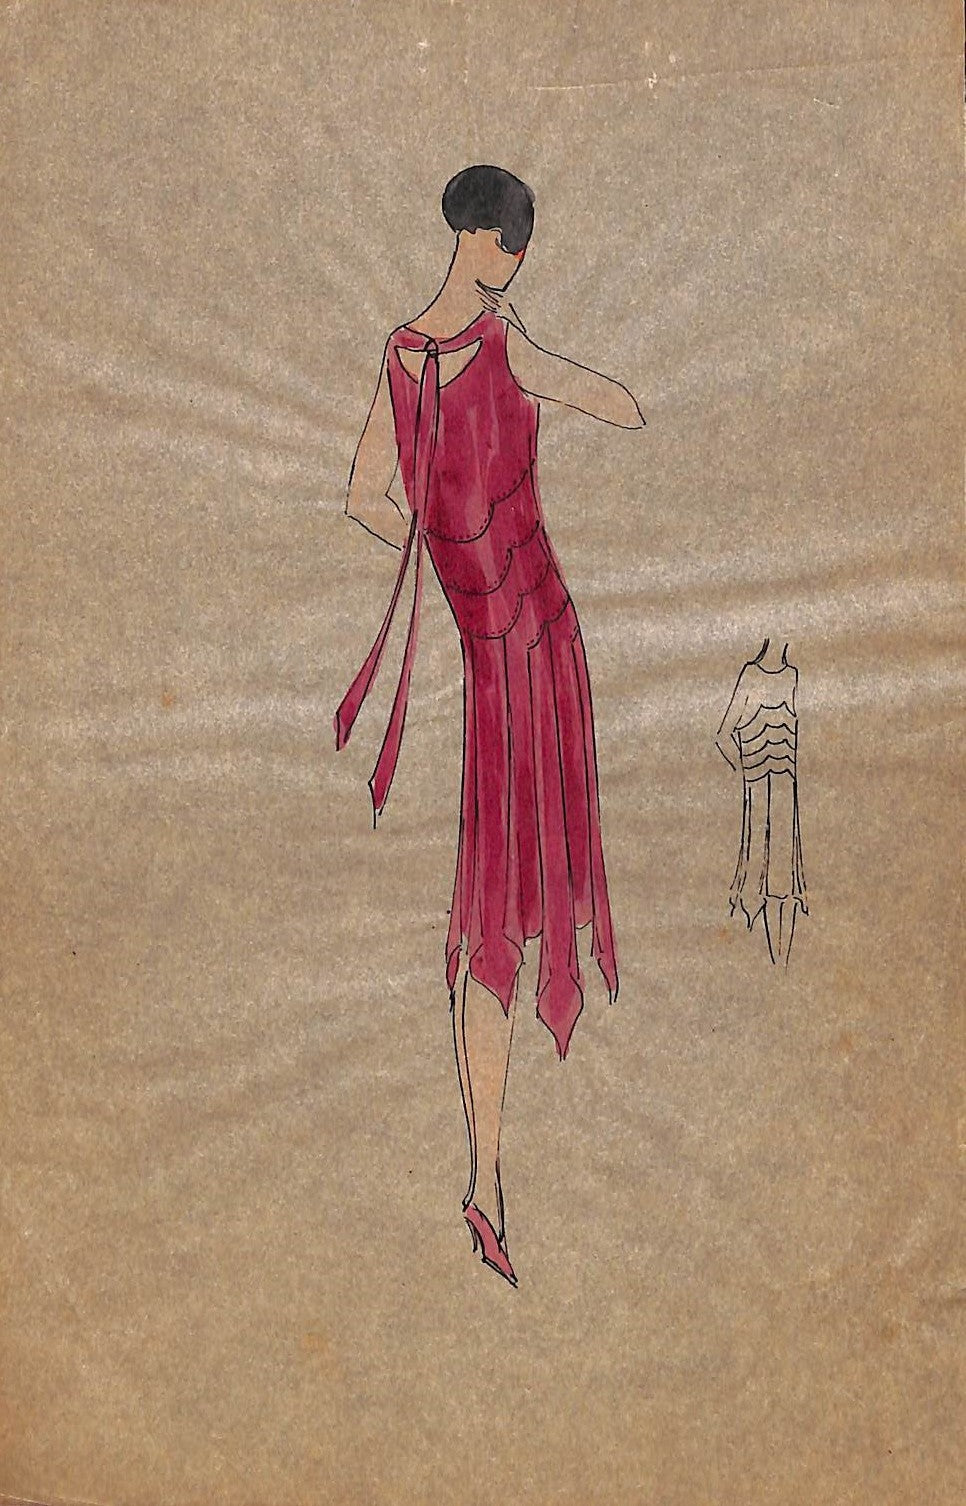 Lanvin of Paris c1920s Original Fashion Illustration in Gouache